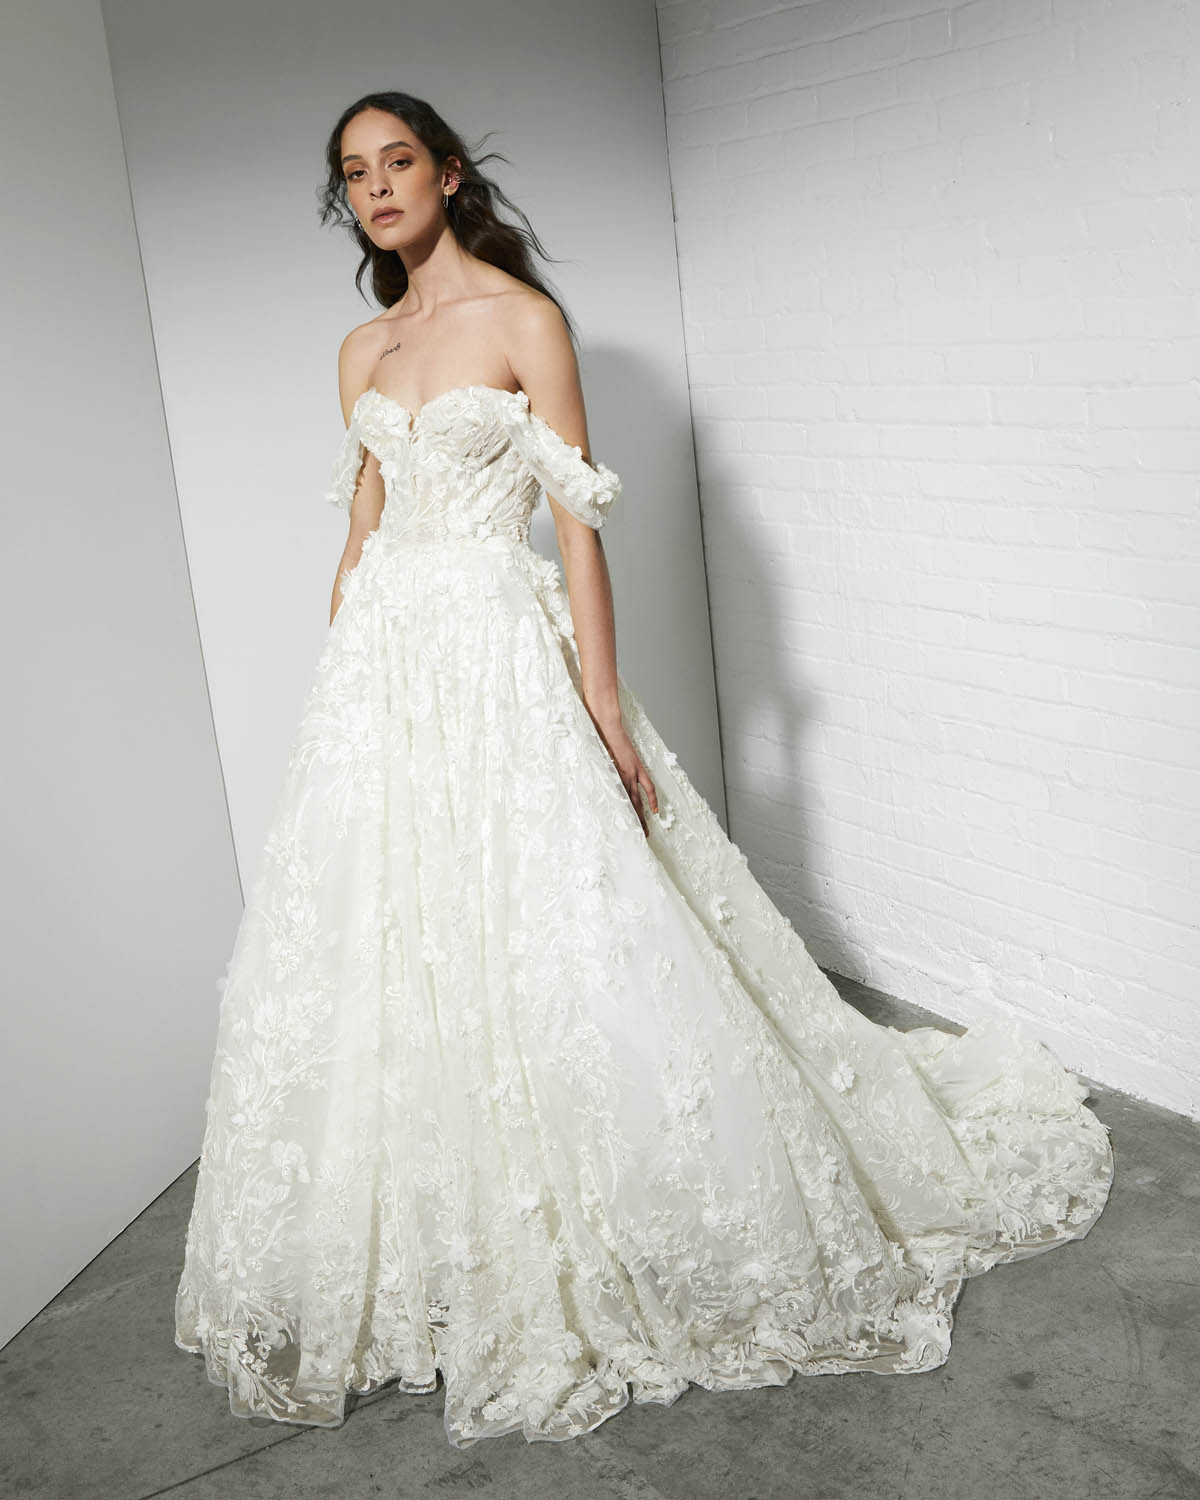 Strapless Ballgown Wedding Dress With Back Detail